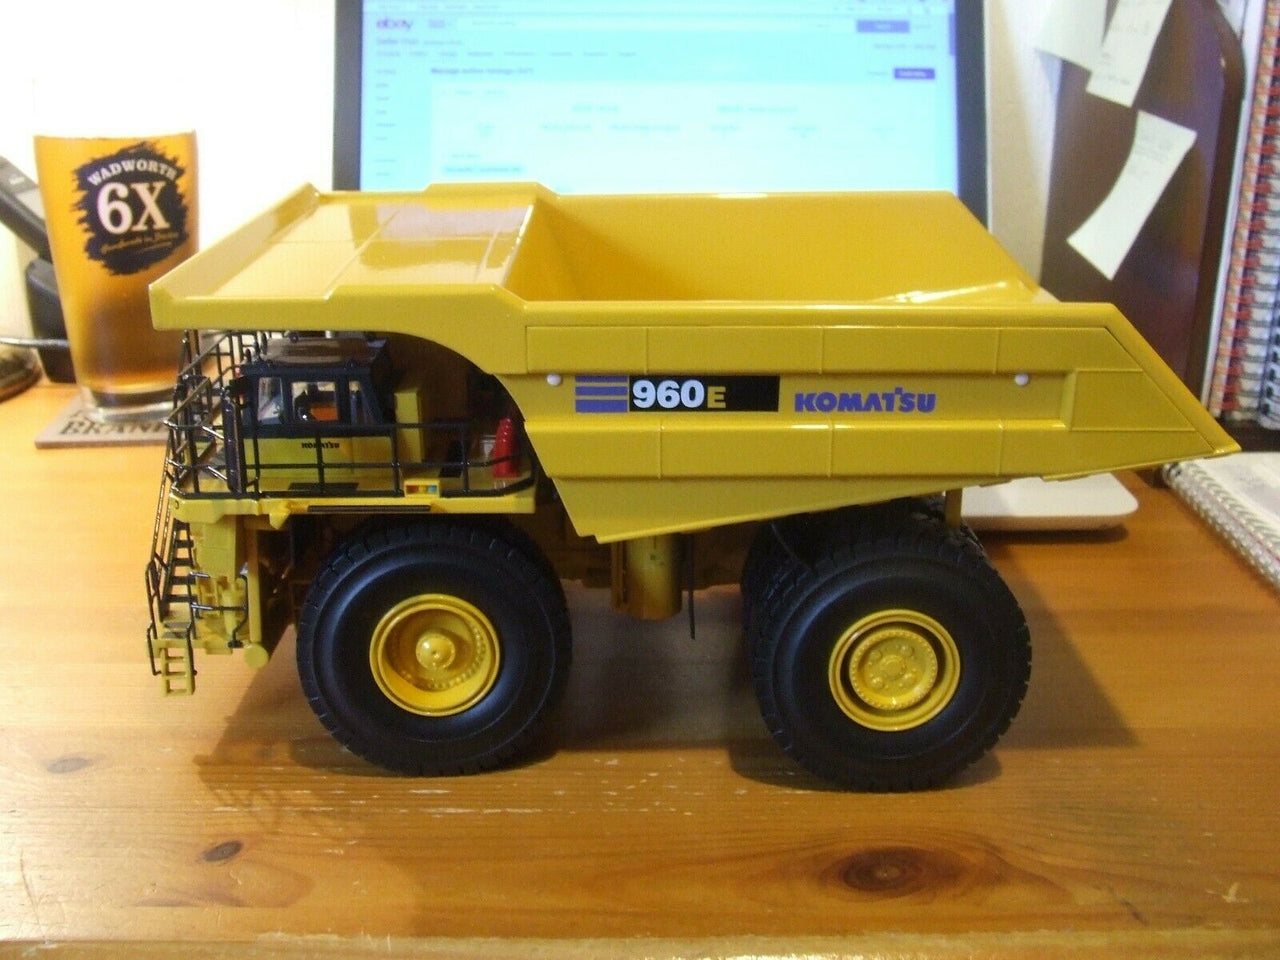 50-3138 Komatsu 960E Mining Truck 1:50 Scale (Discontinued Model)